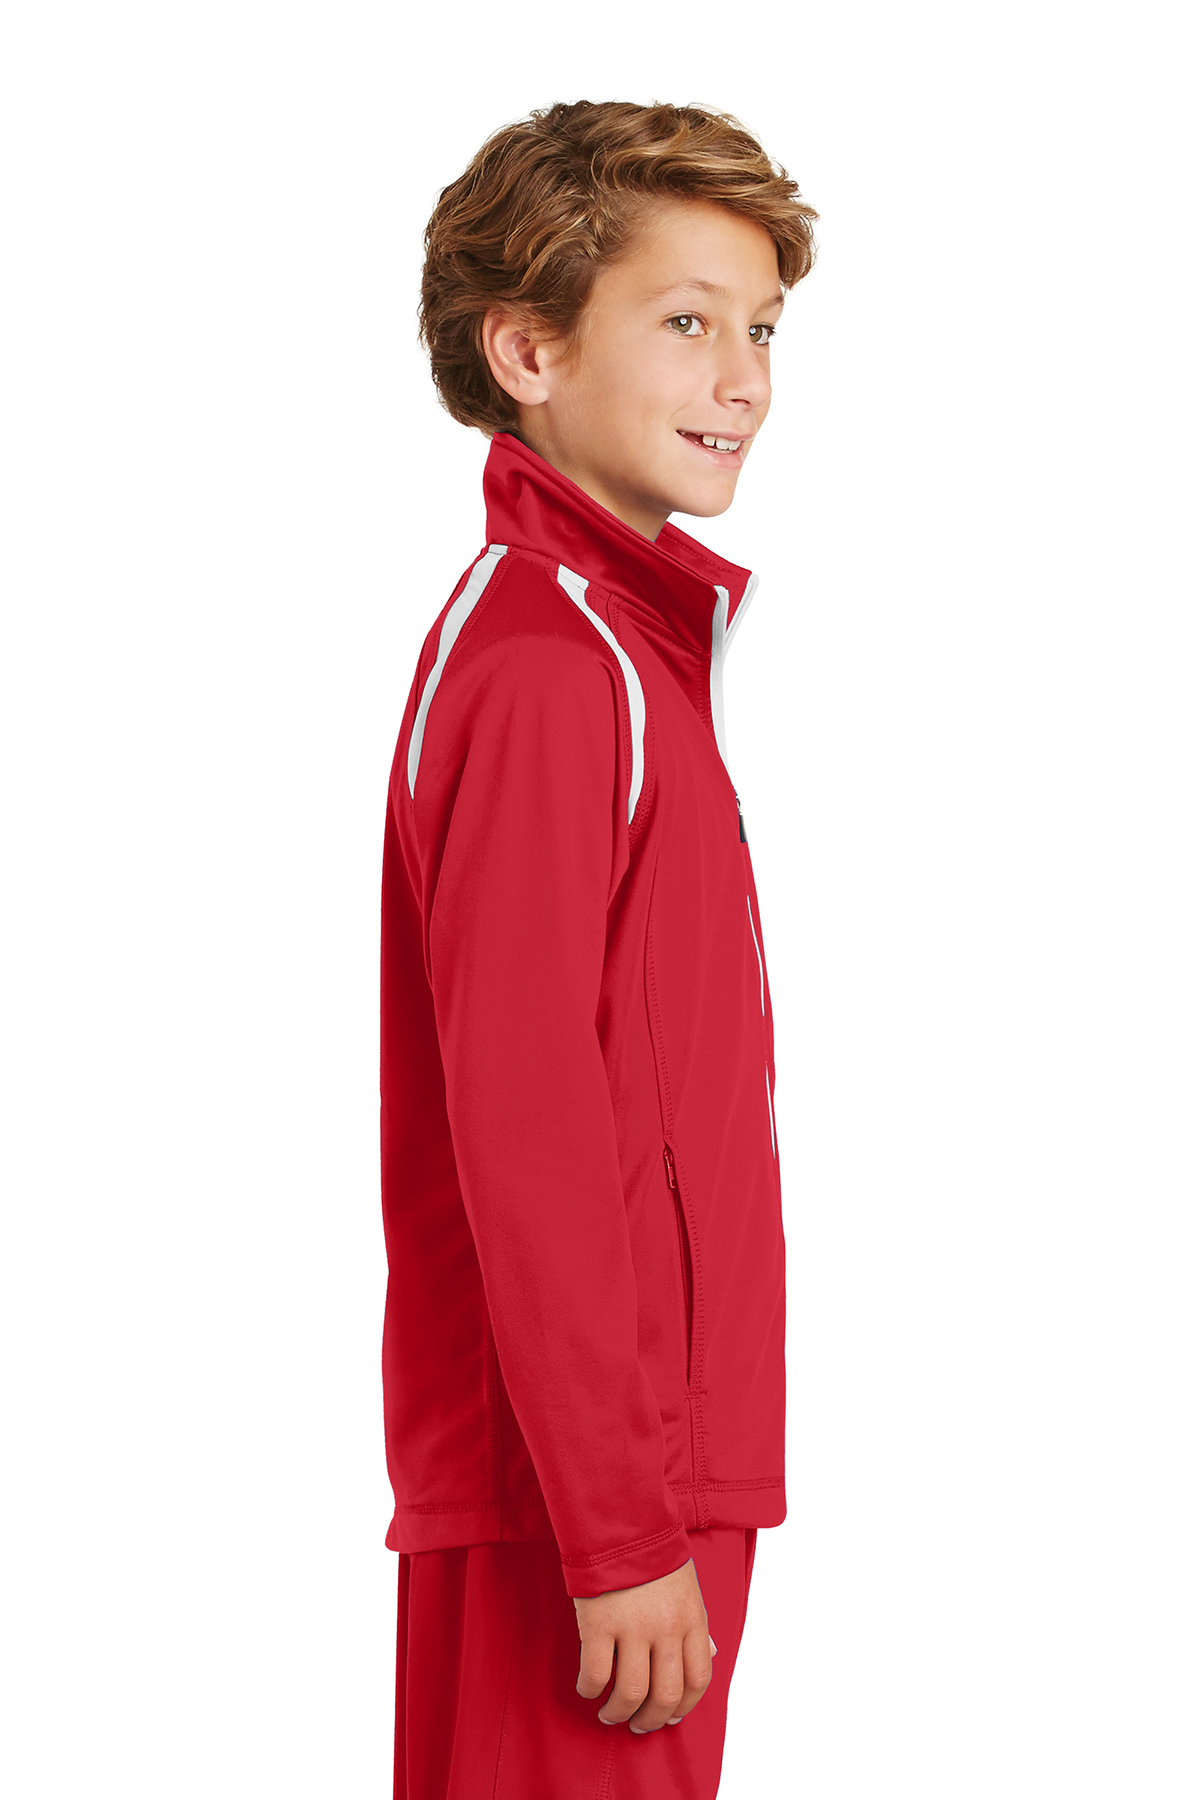 YST90 Sport-Tek® Youth Tricot Track Jacket 